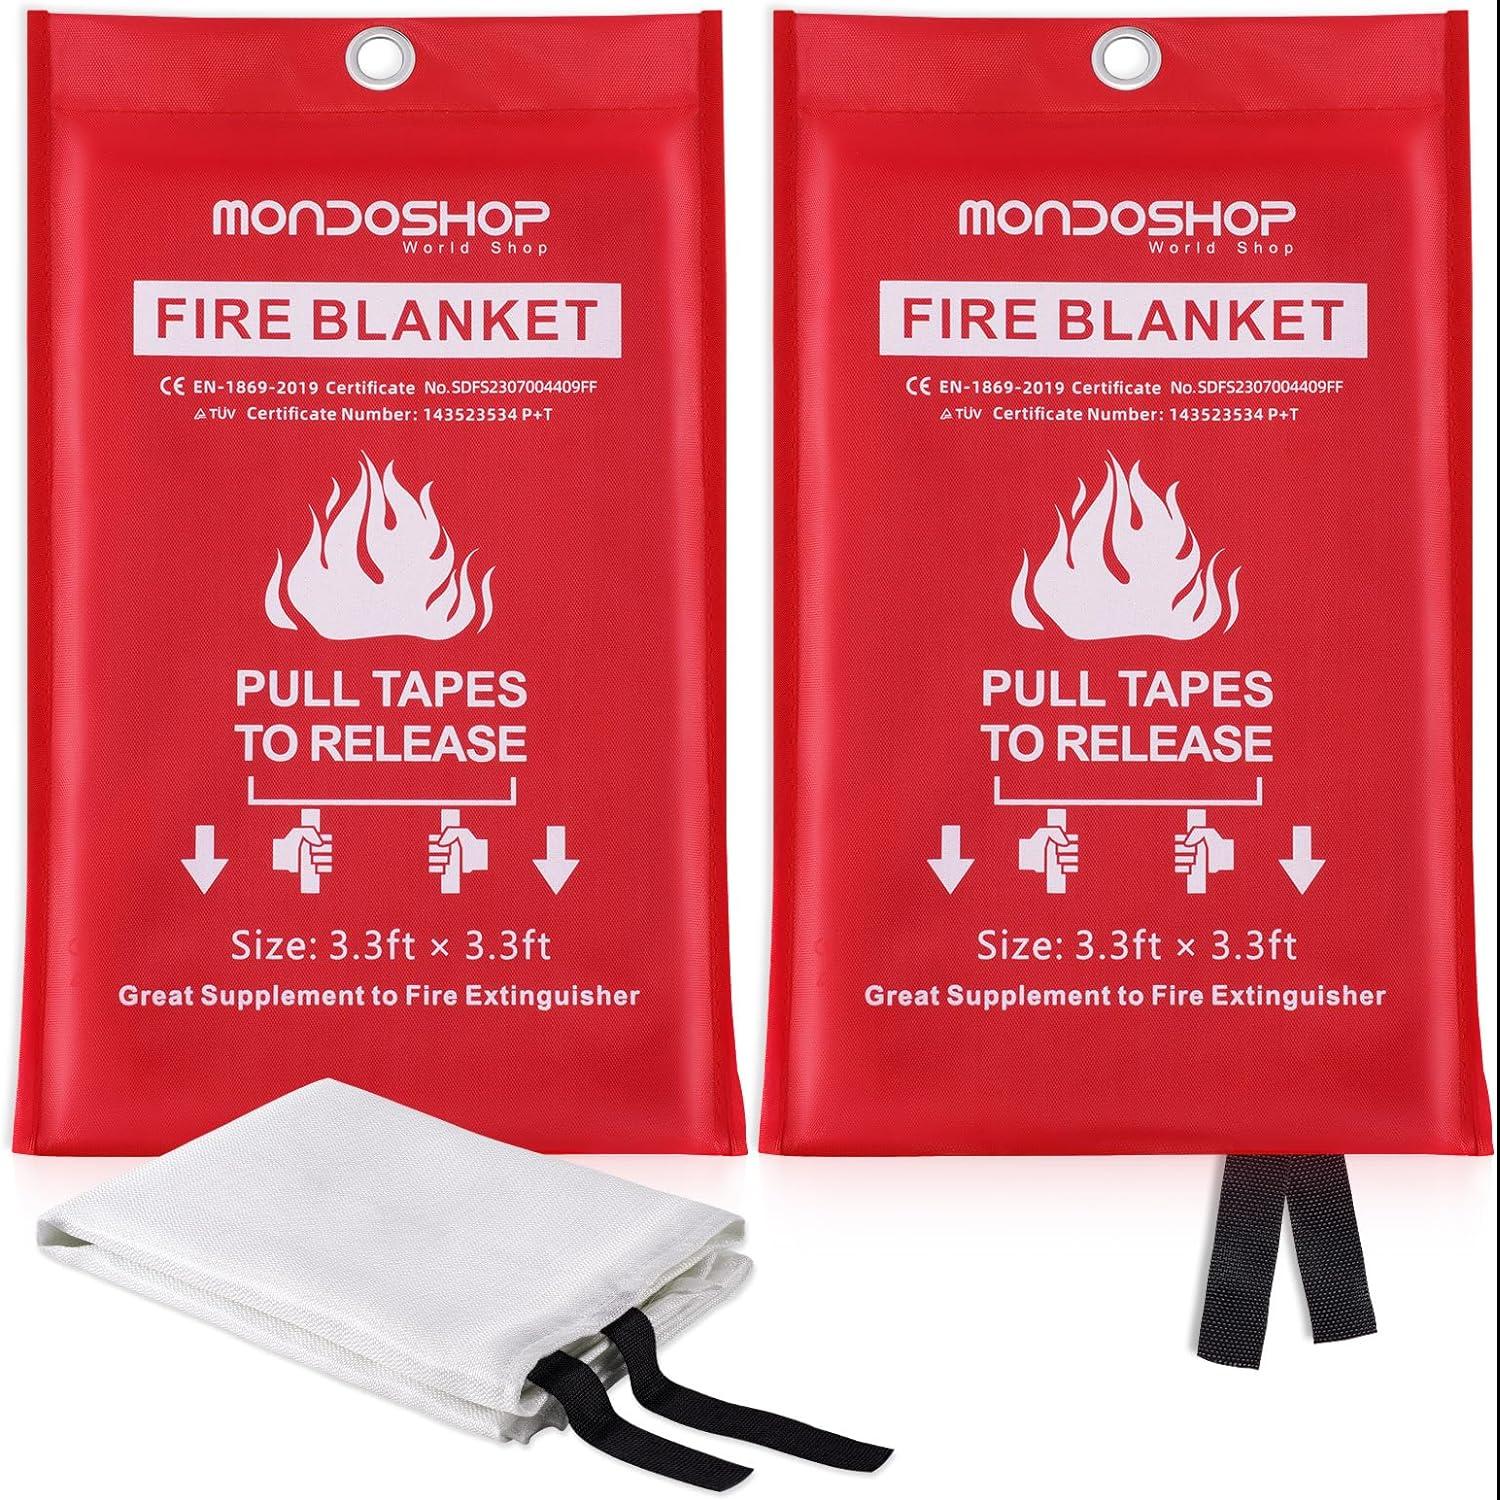 Mondoshop Emergency Fire Retardant Blankets 2 Pack for $6.96